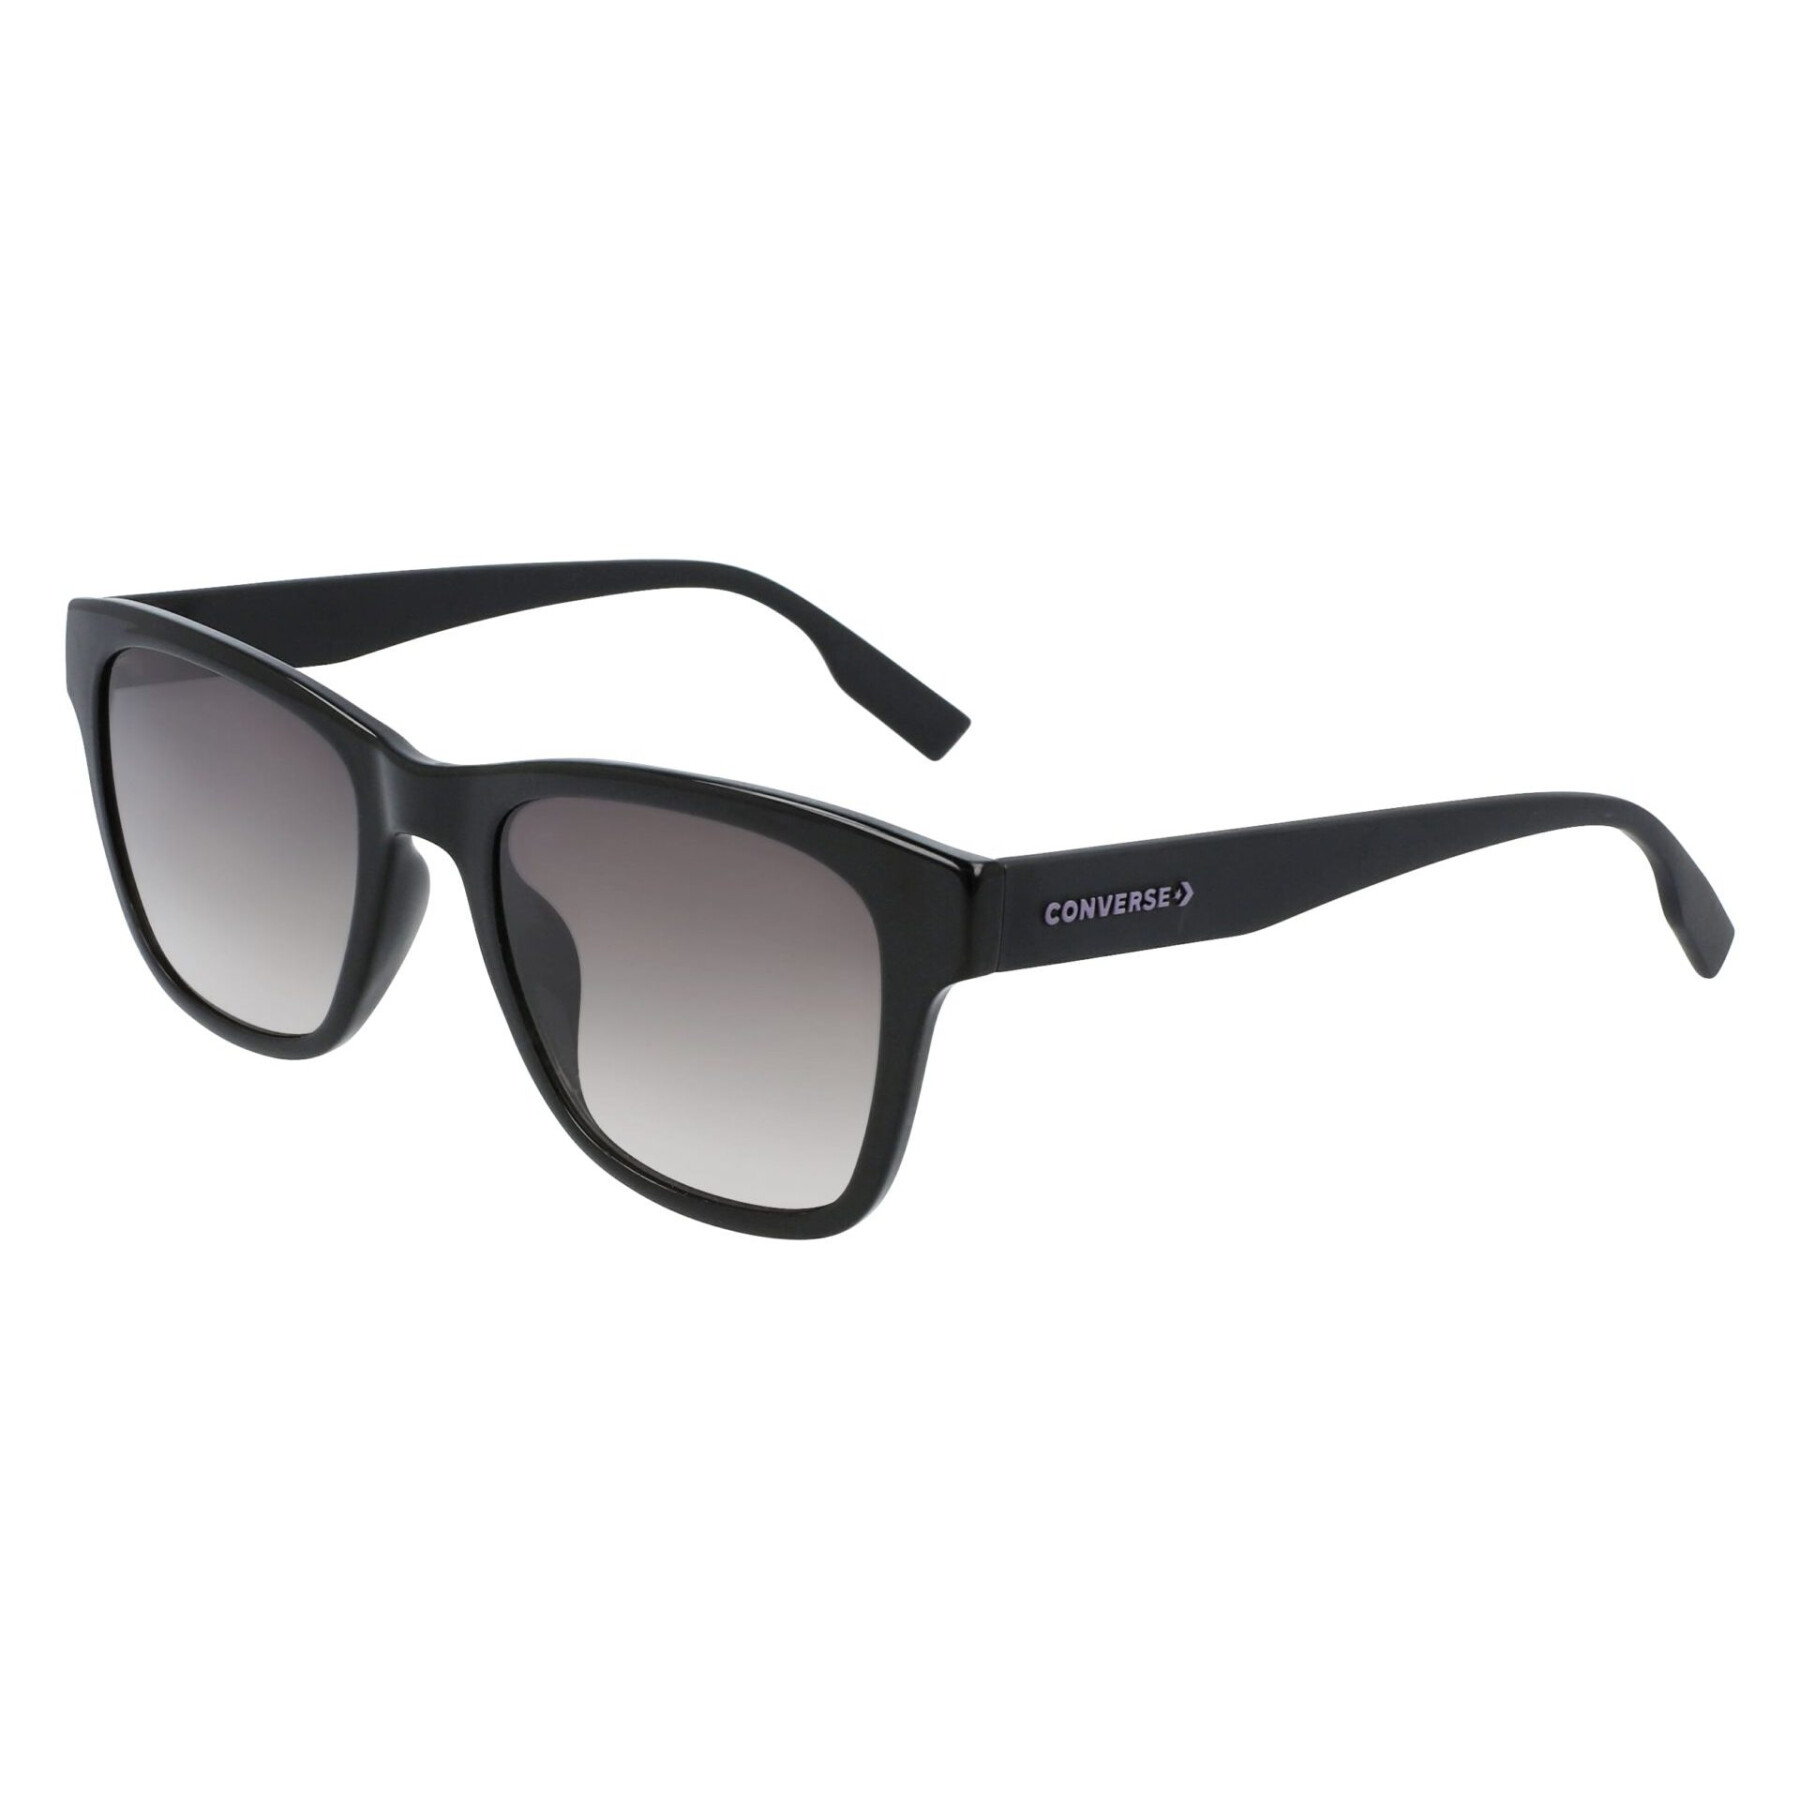 Women's sunglasses Converse CV507SMALDEN